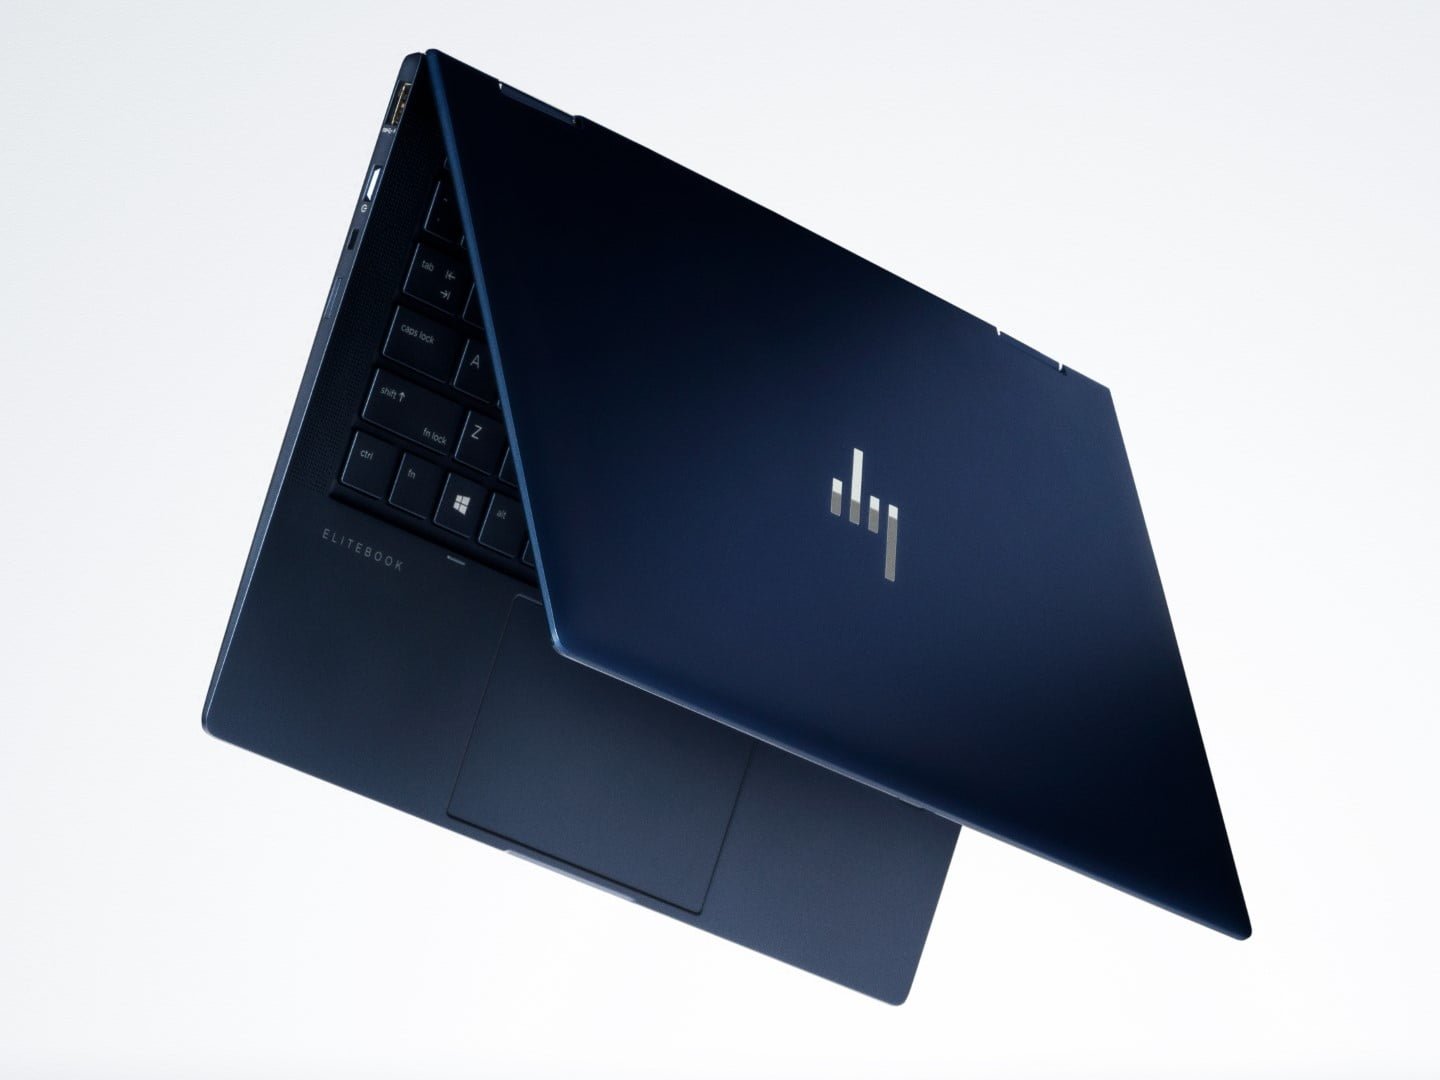 HP Dragonfly مدل بهبود یافته EliteBook x360 1030 برای رقابت با XPS 13 7390